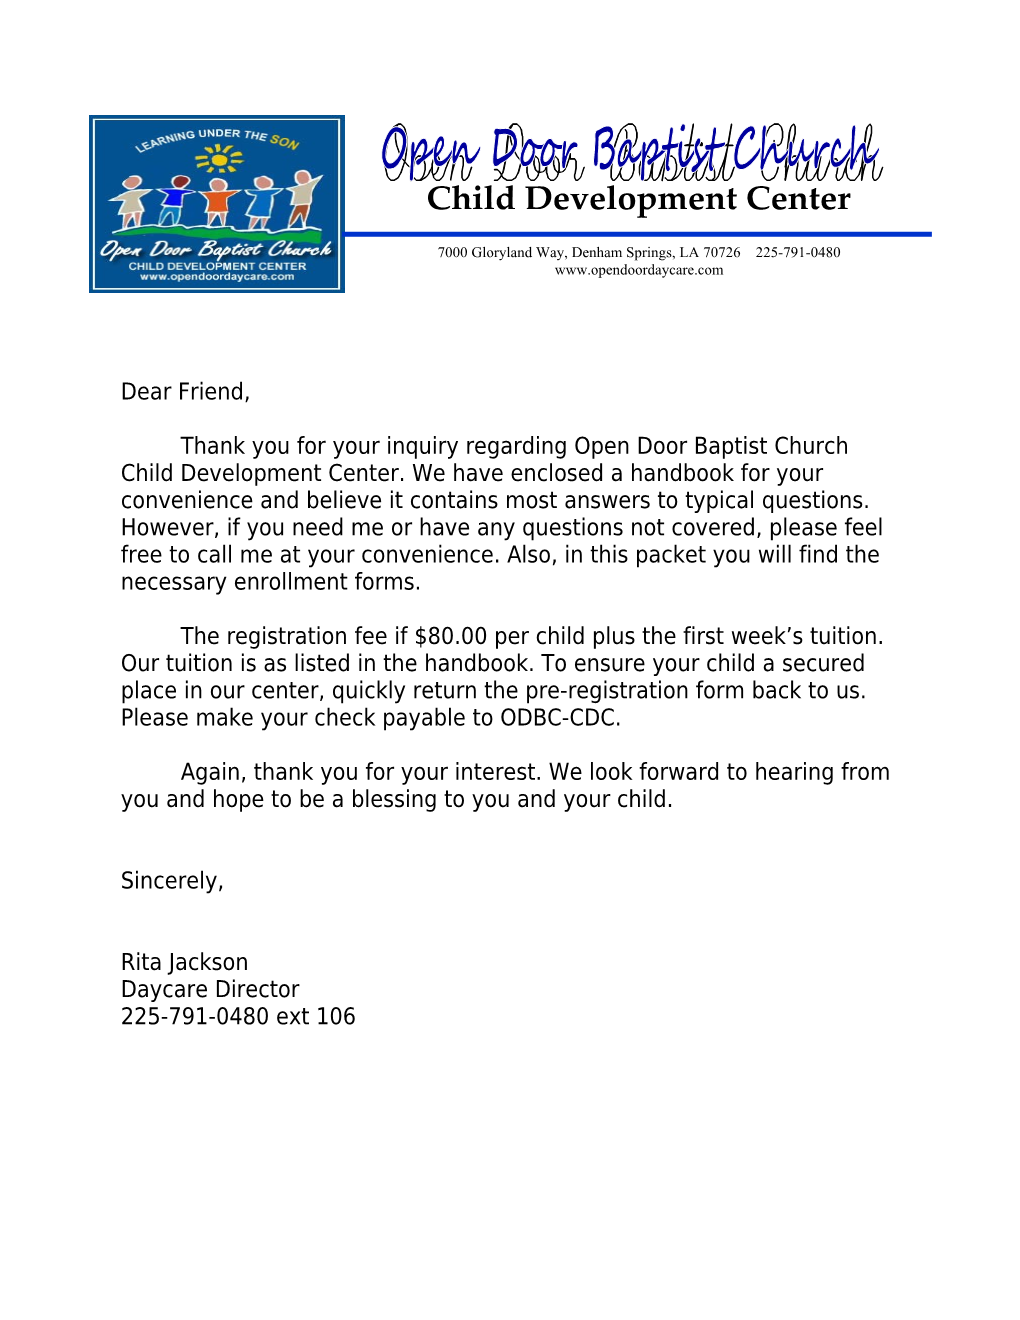 Thank You for Your Inquiry Regarding Open Door Baptist Church Child Development Center